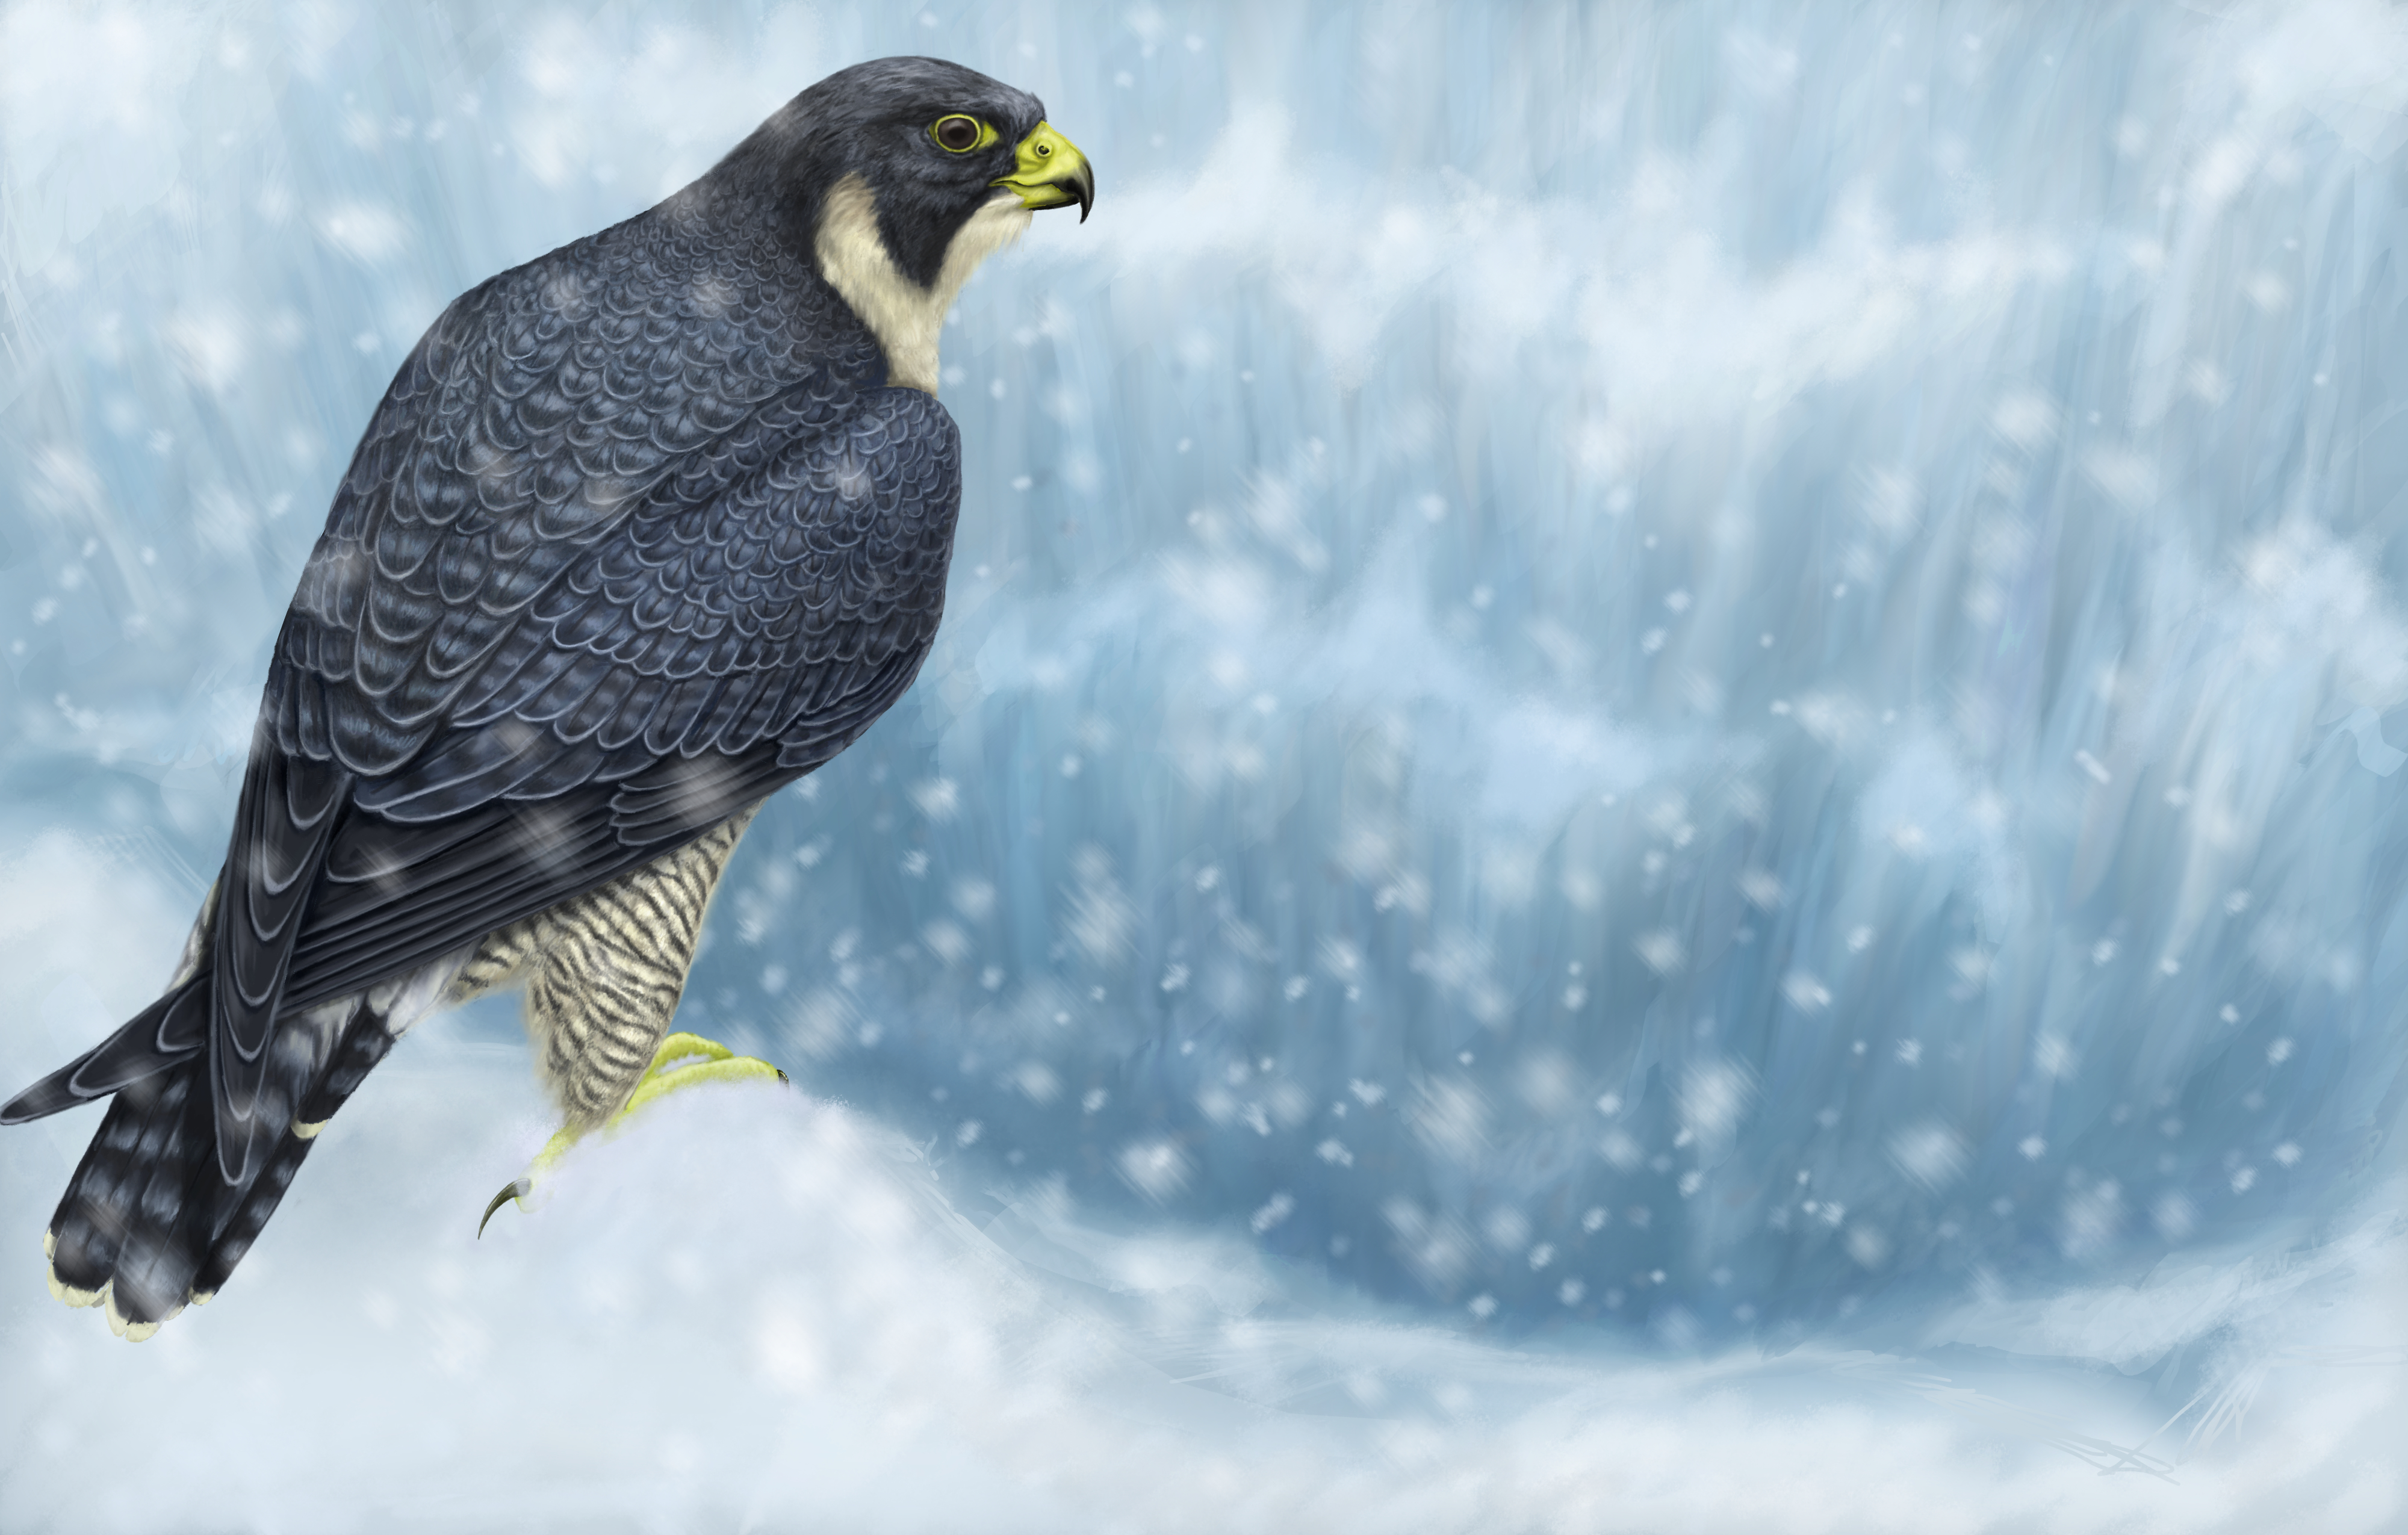 snowfall, animal, peregrine falcon, bird of prey, bird, snow, winter, birds Free Stock Photo